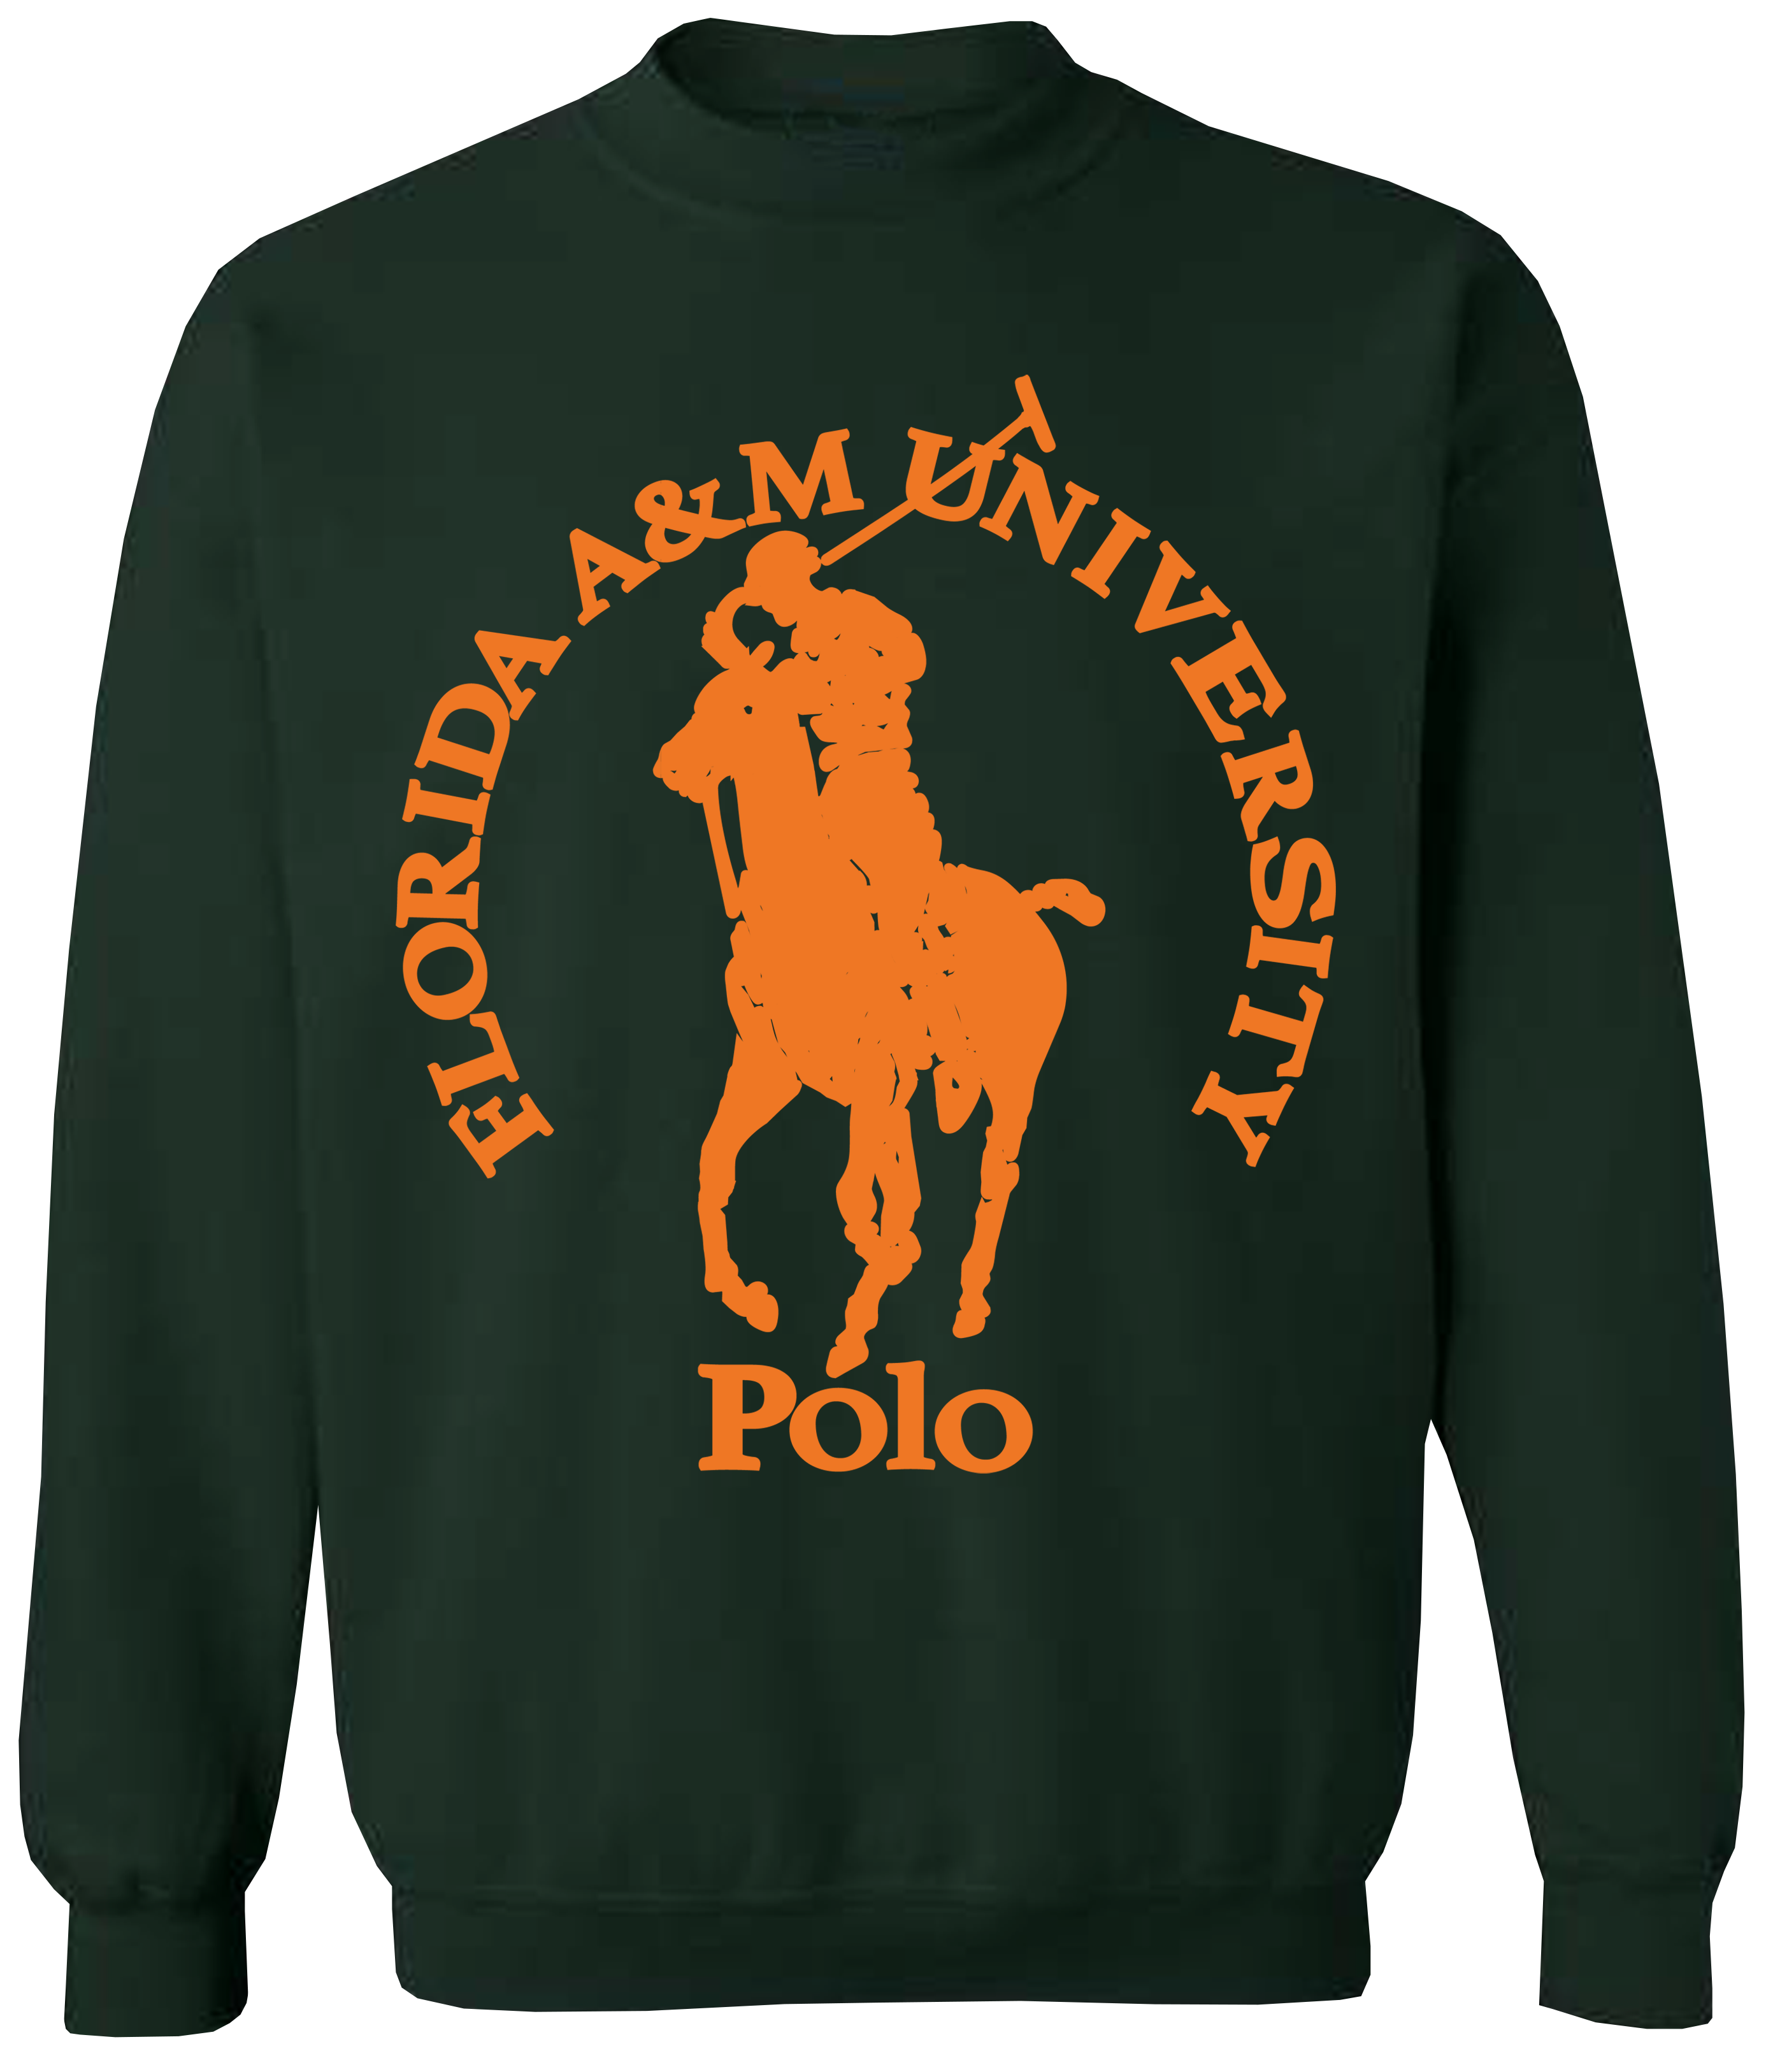 HBCU Polo Crewneck Sweatshirt - Florida A&M [FAMU]